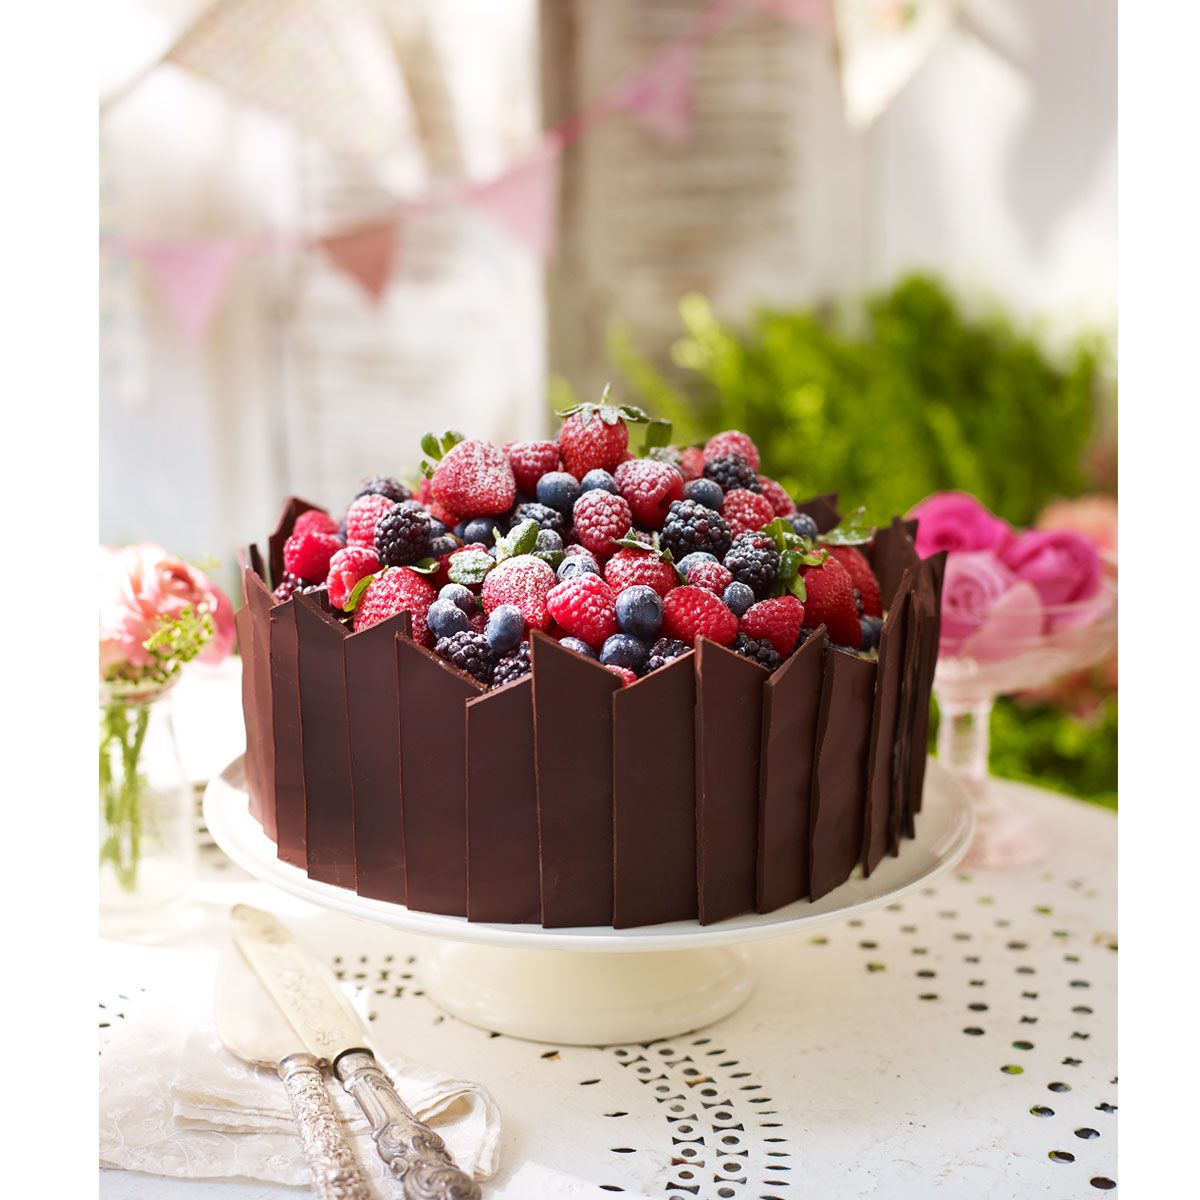 Easy celebration chocolate cake with vanilla bean buttercream - NZ Herald